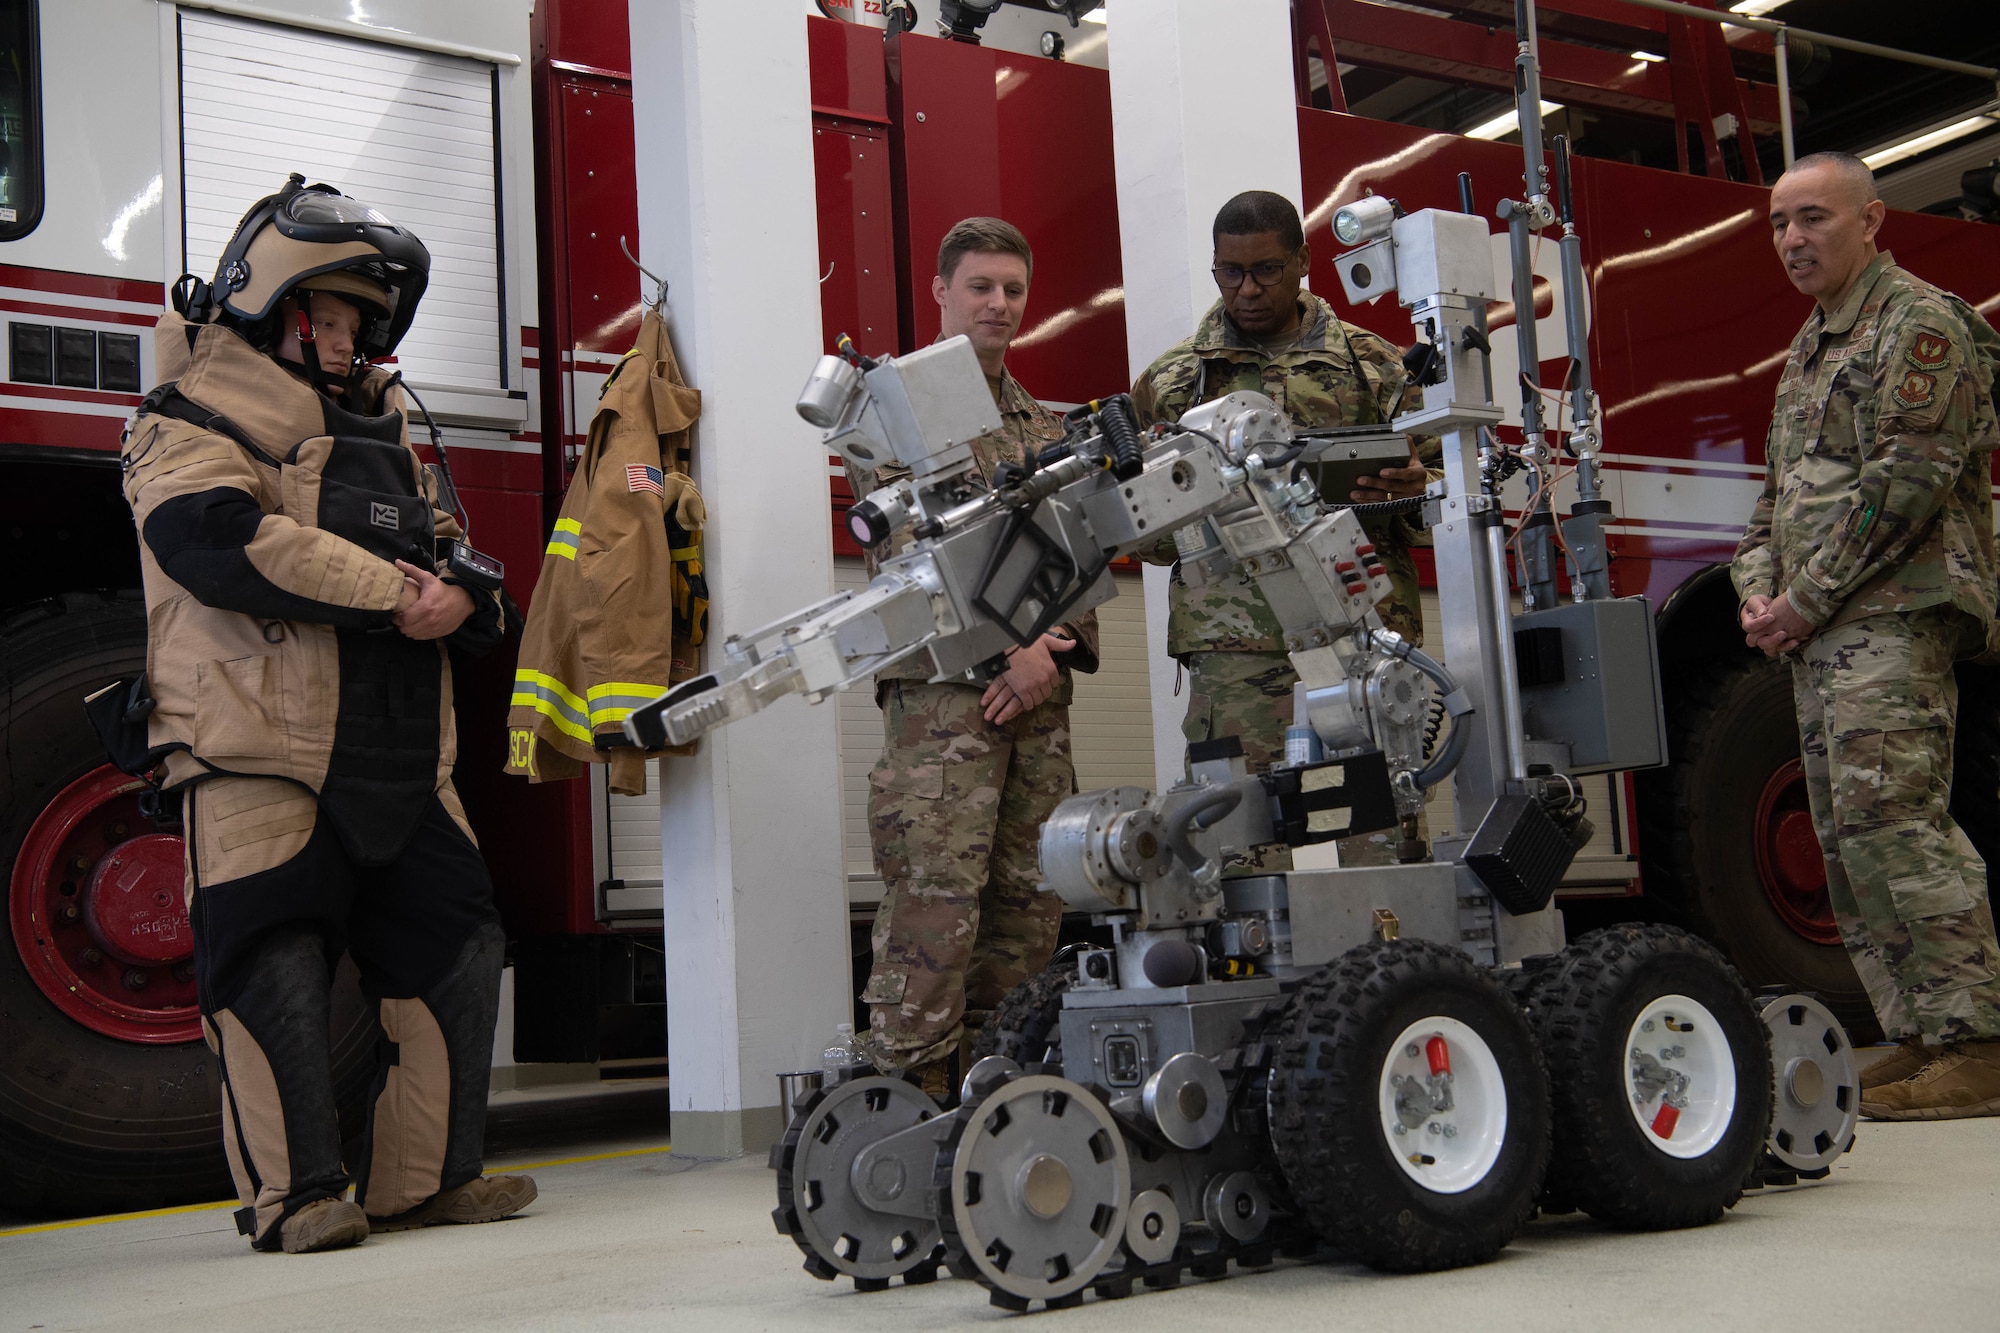 Airmen operate robots